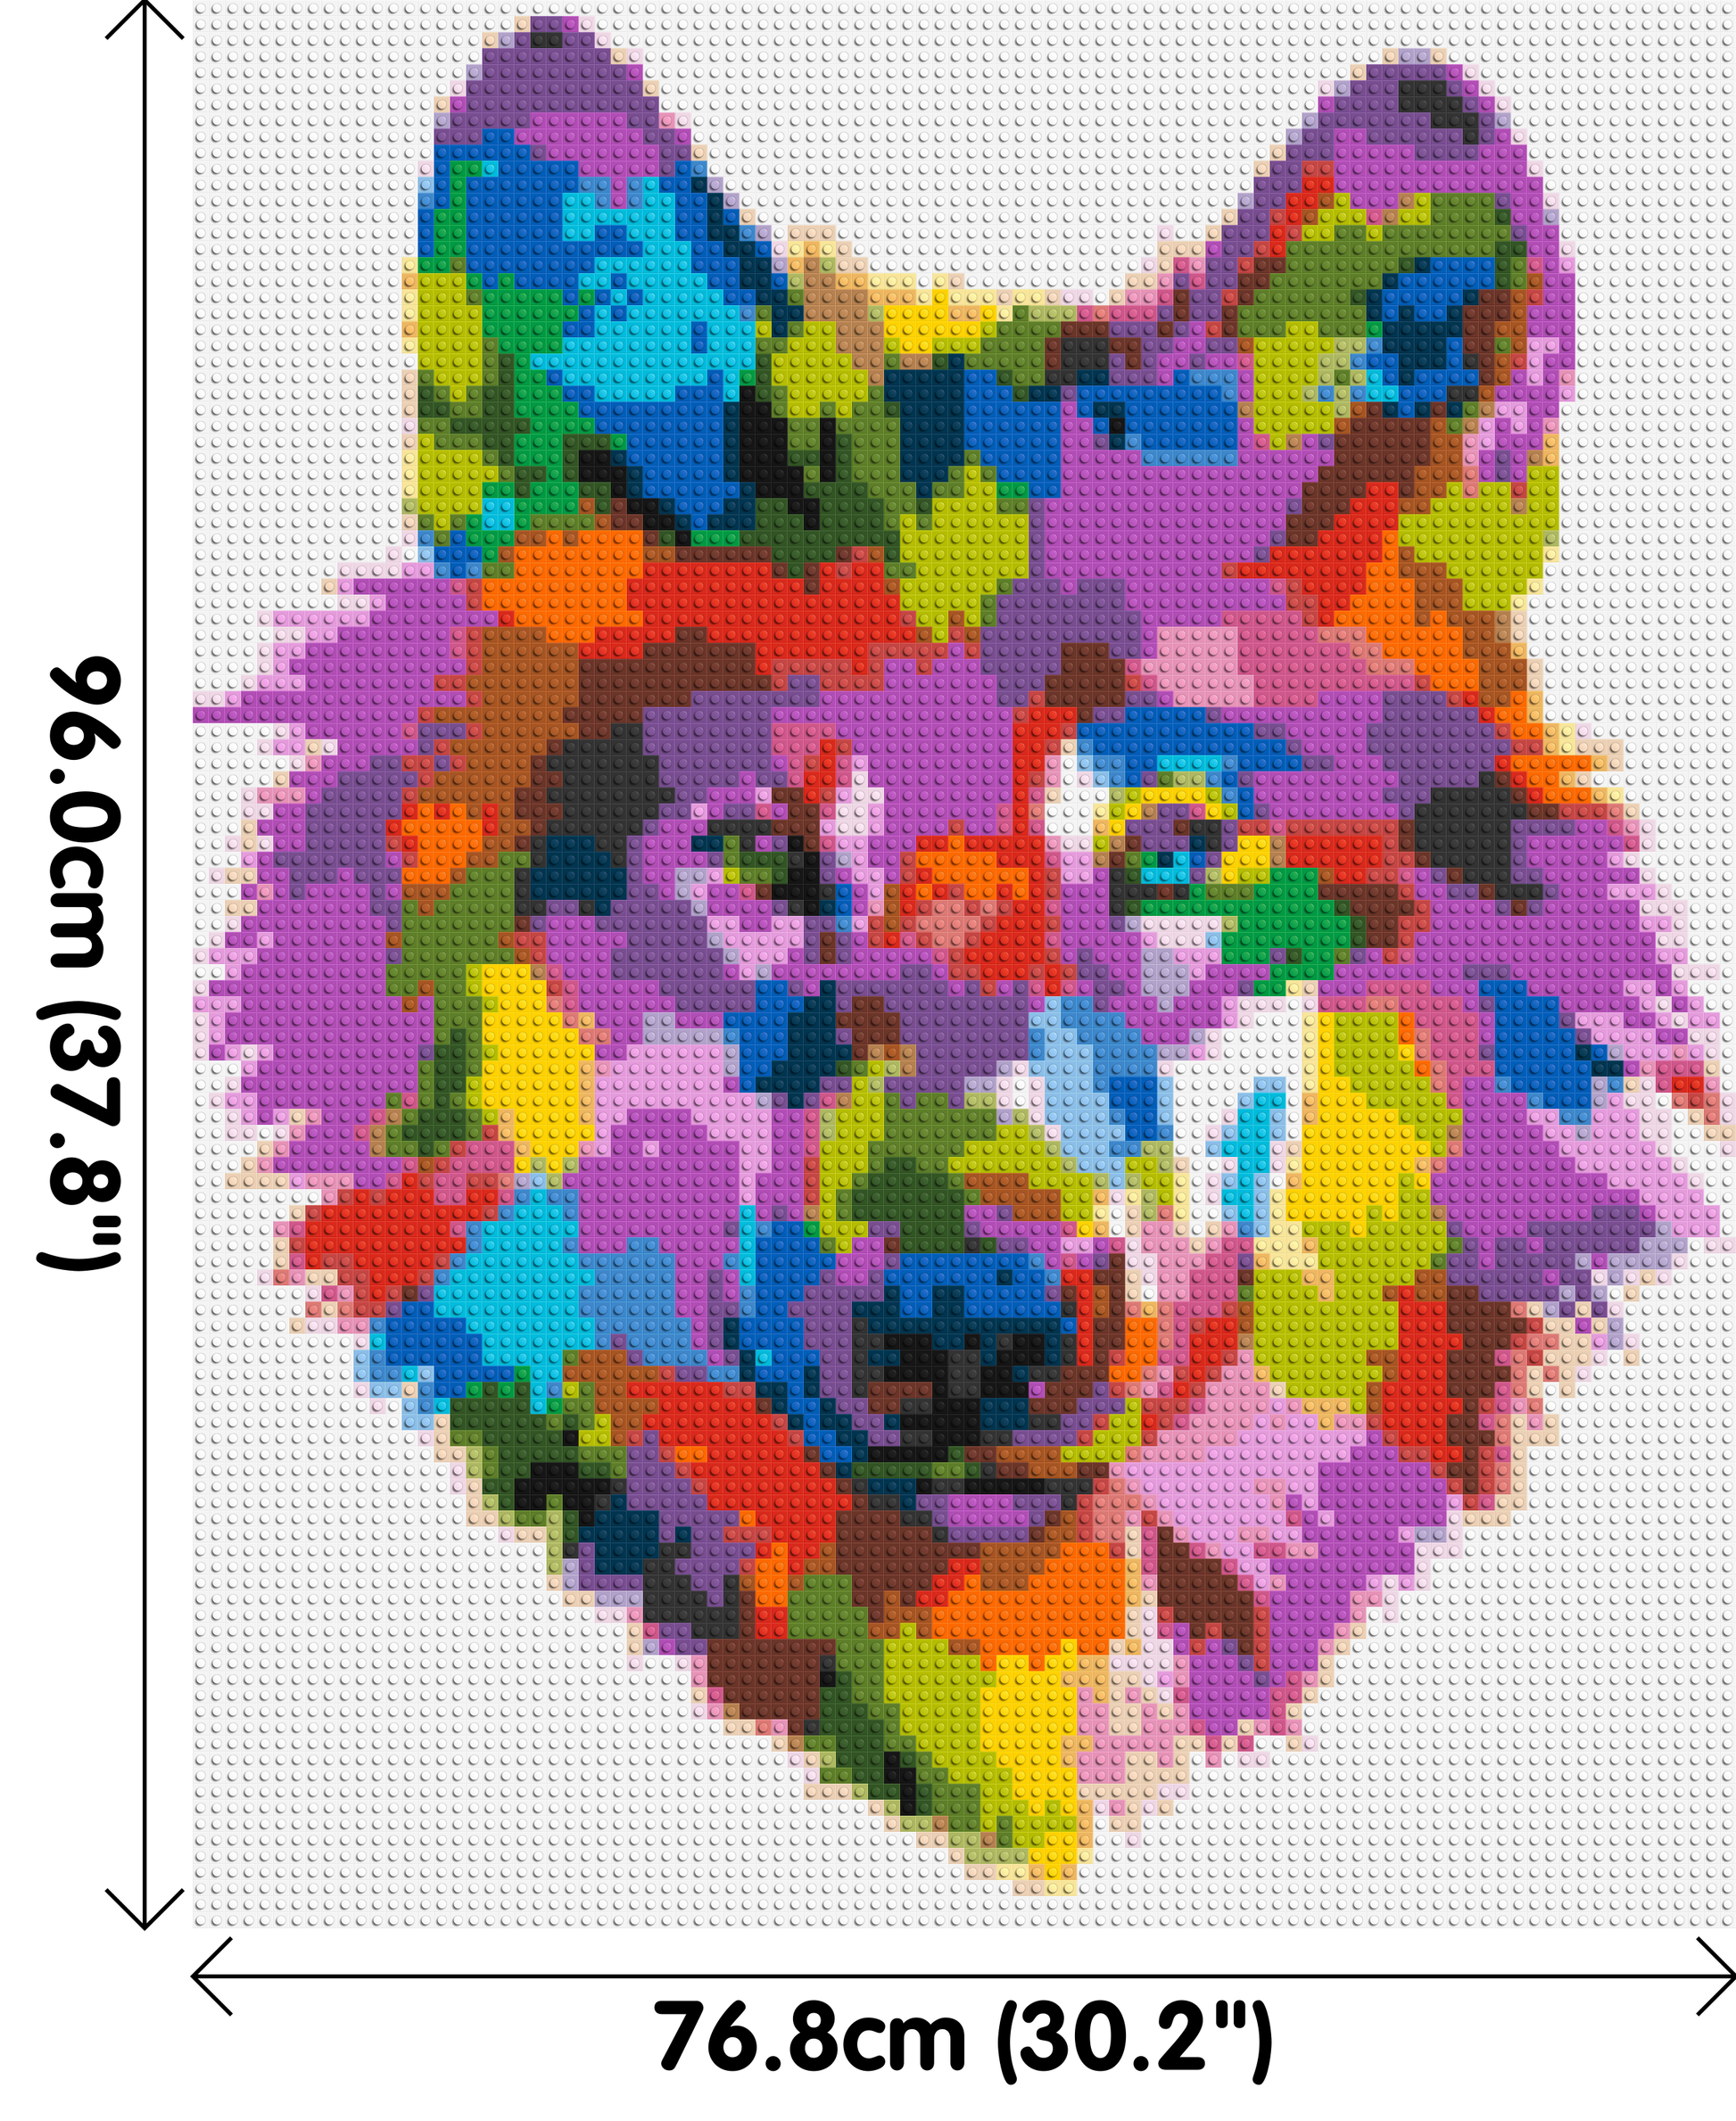 Wolf Colourful Pop Art - Brick Art Mosaic Kit 4x5 dimensions